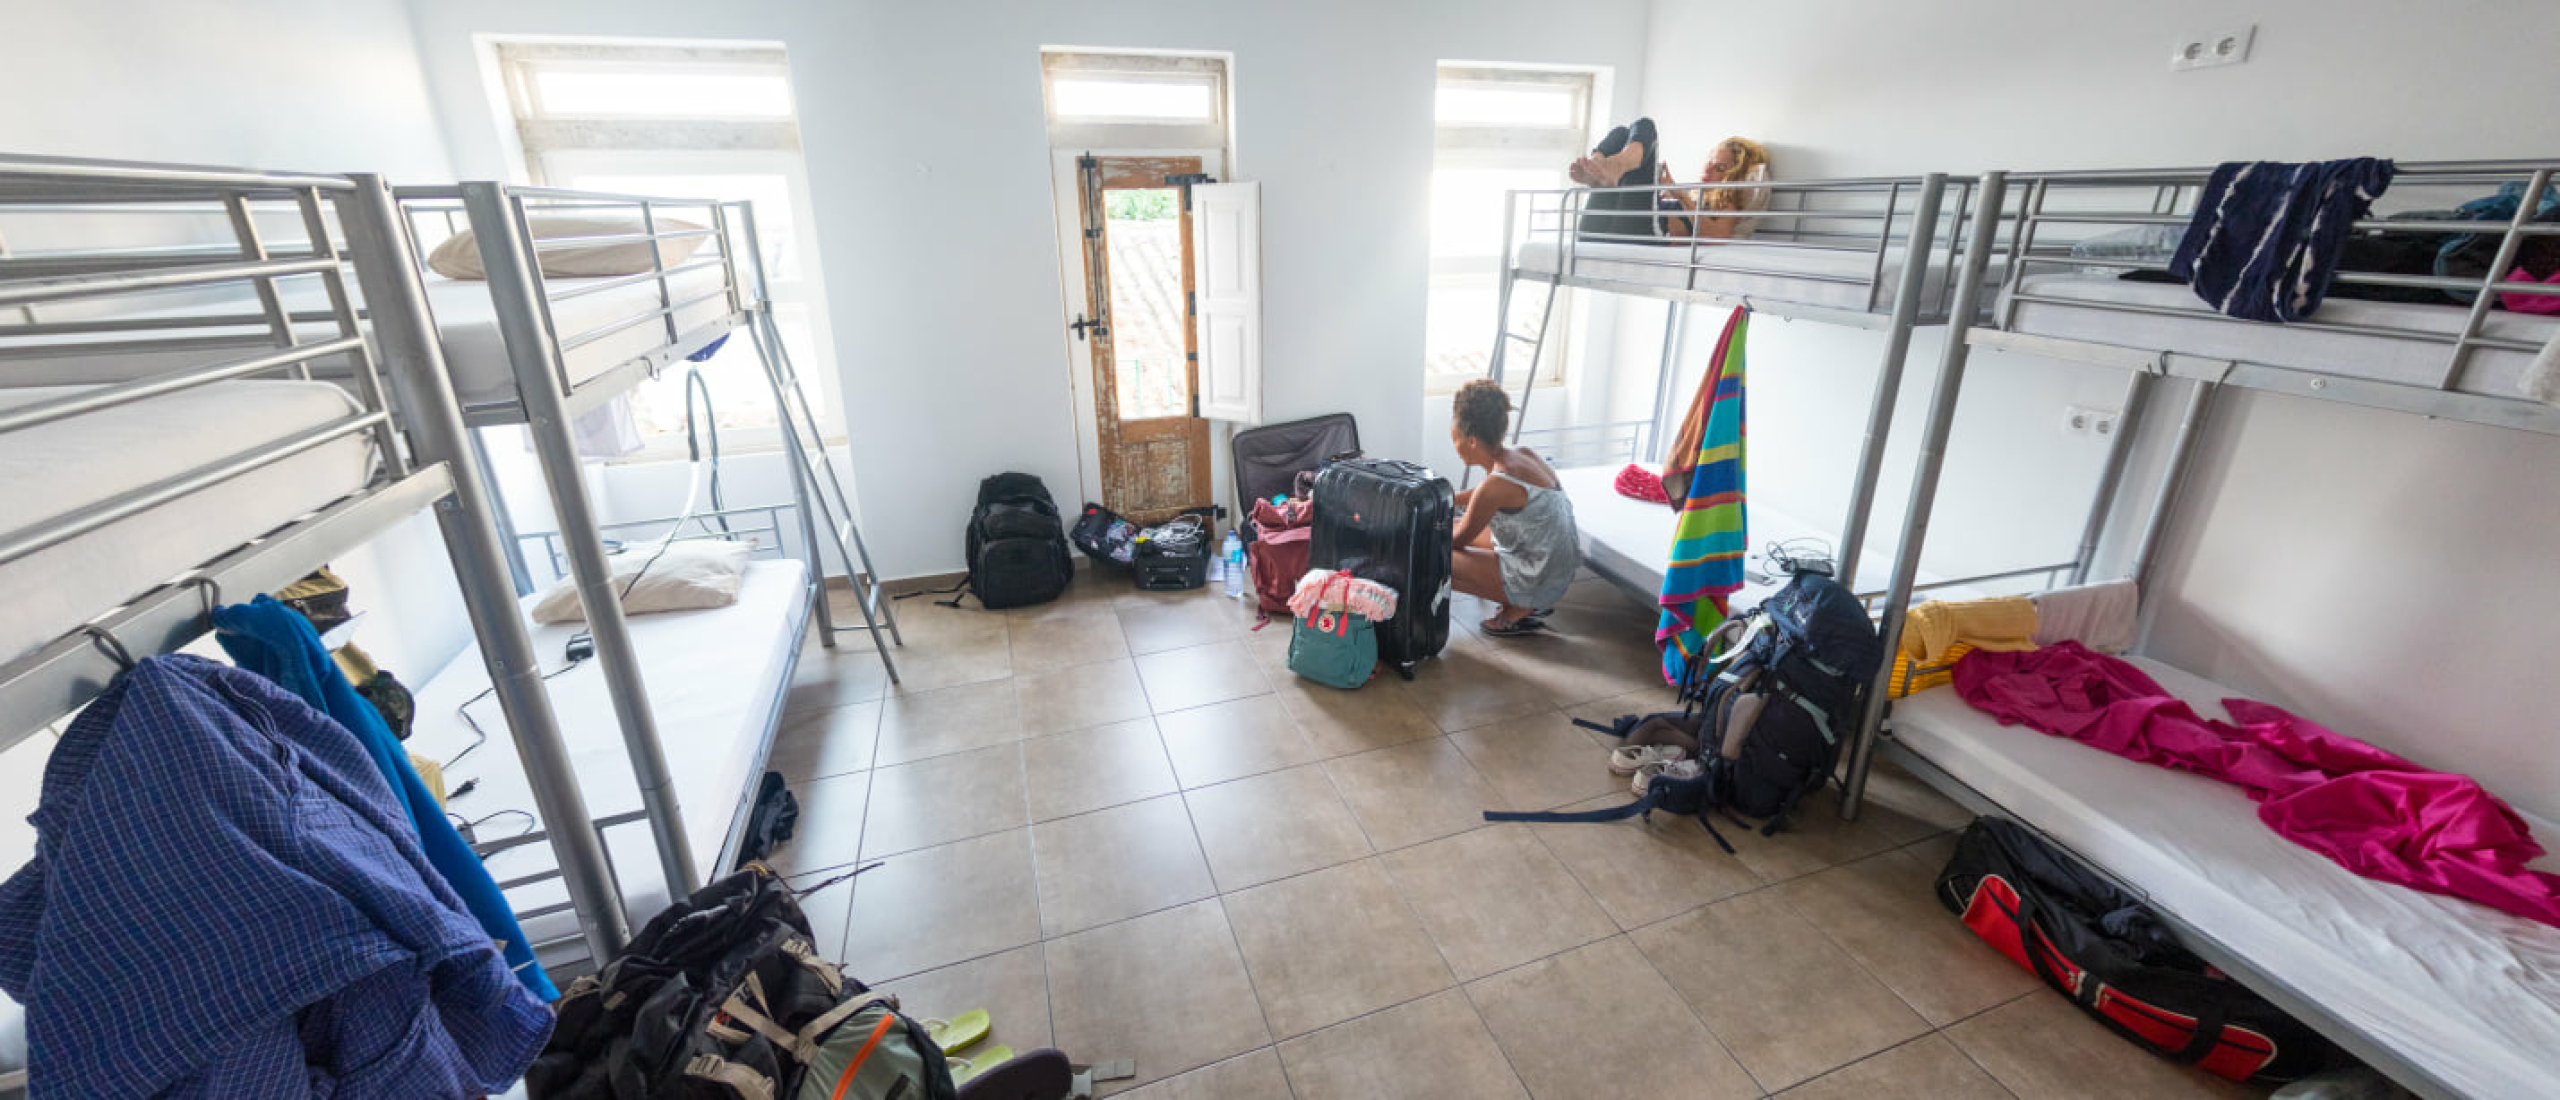 wat-is-een-hostel-casa-da-madalena-backpackers-hostel-in-faro